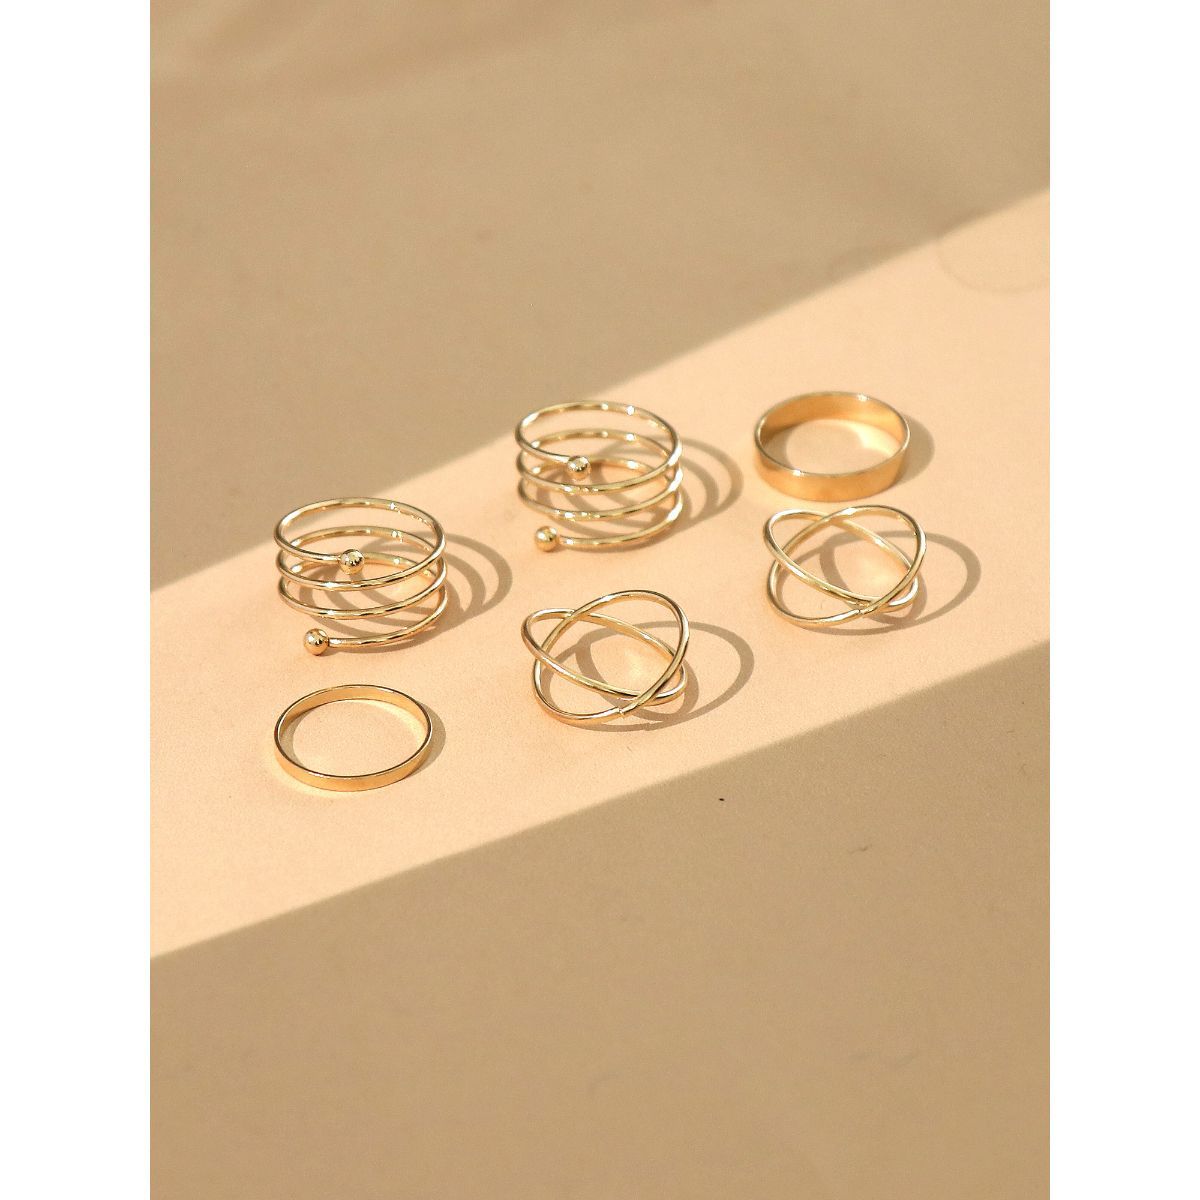 Minimal Solid Gold Ring Set of 6